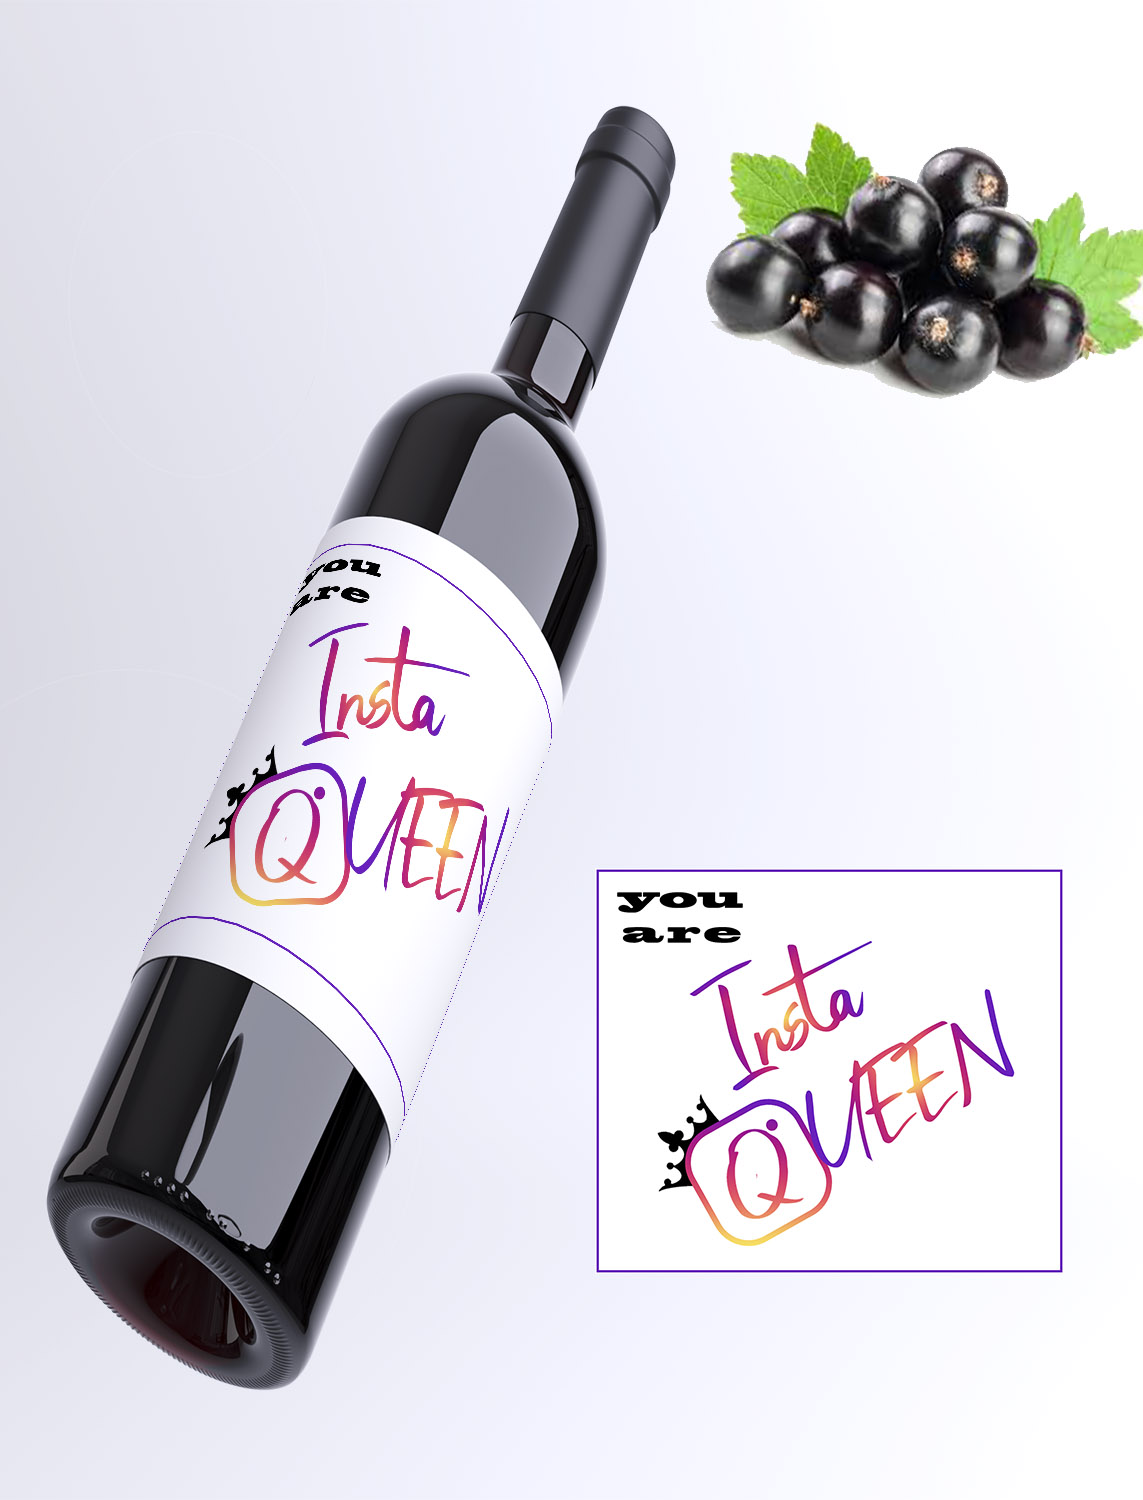 Instagram queen - rybízové víno